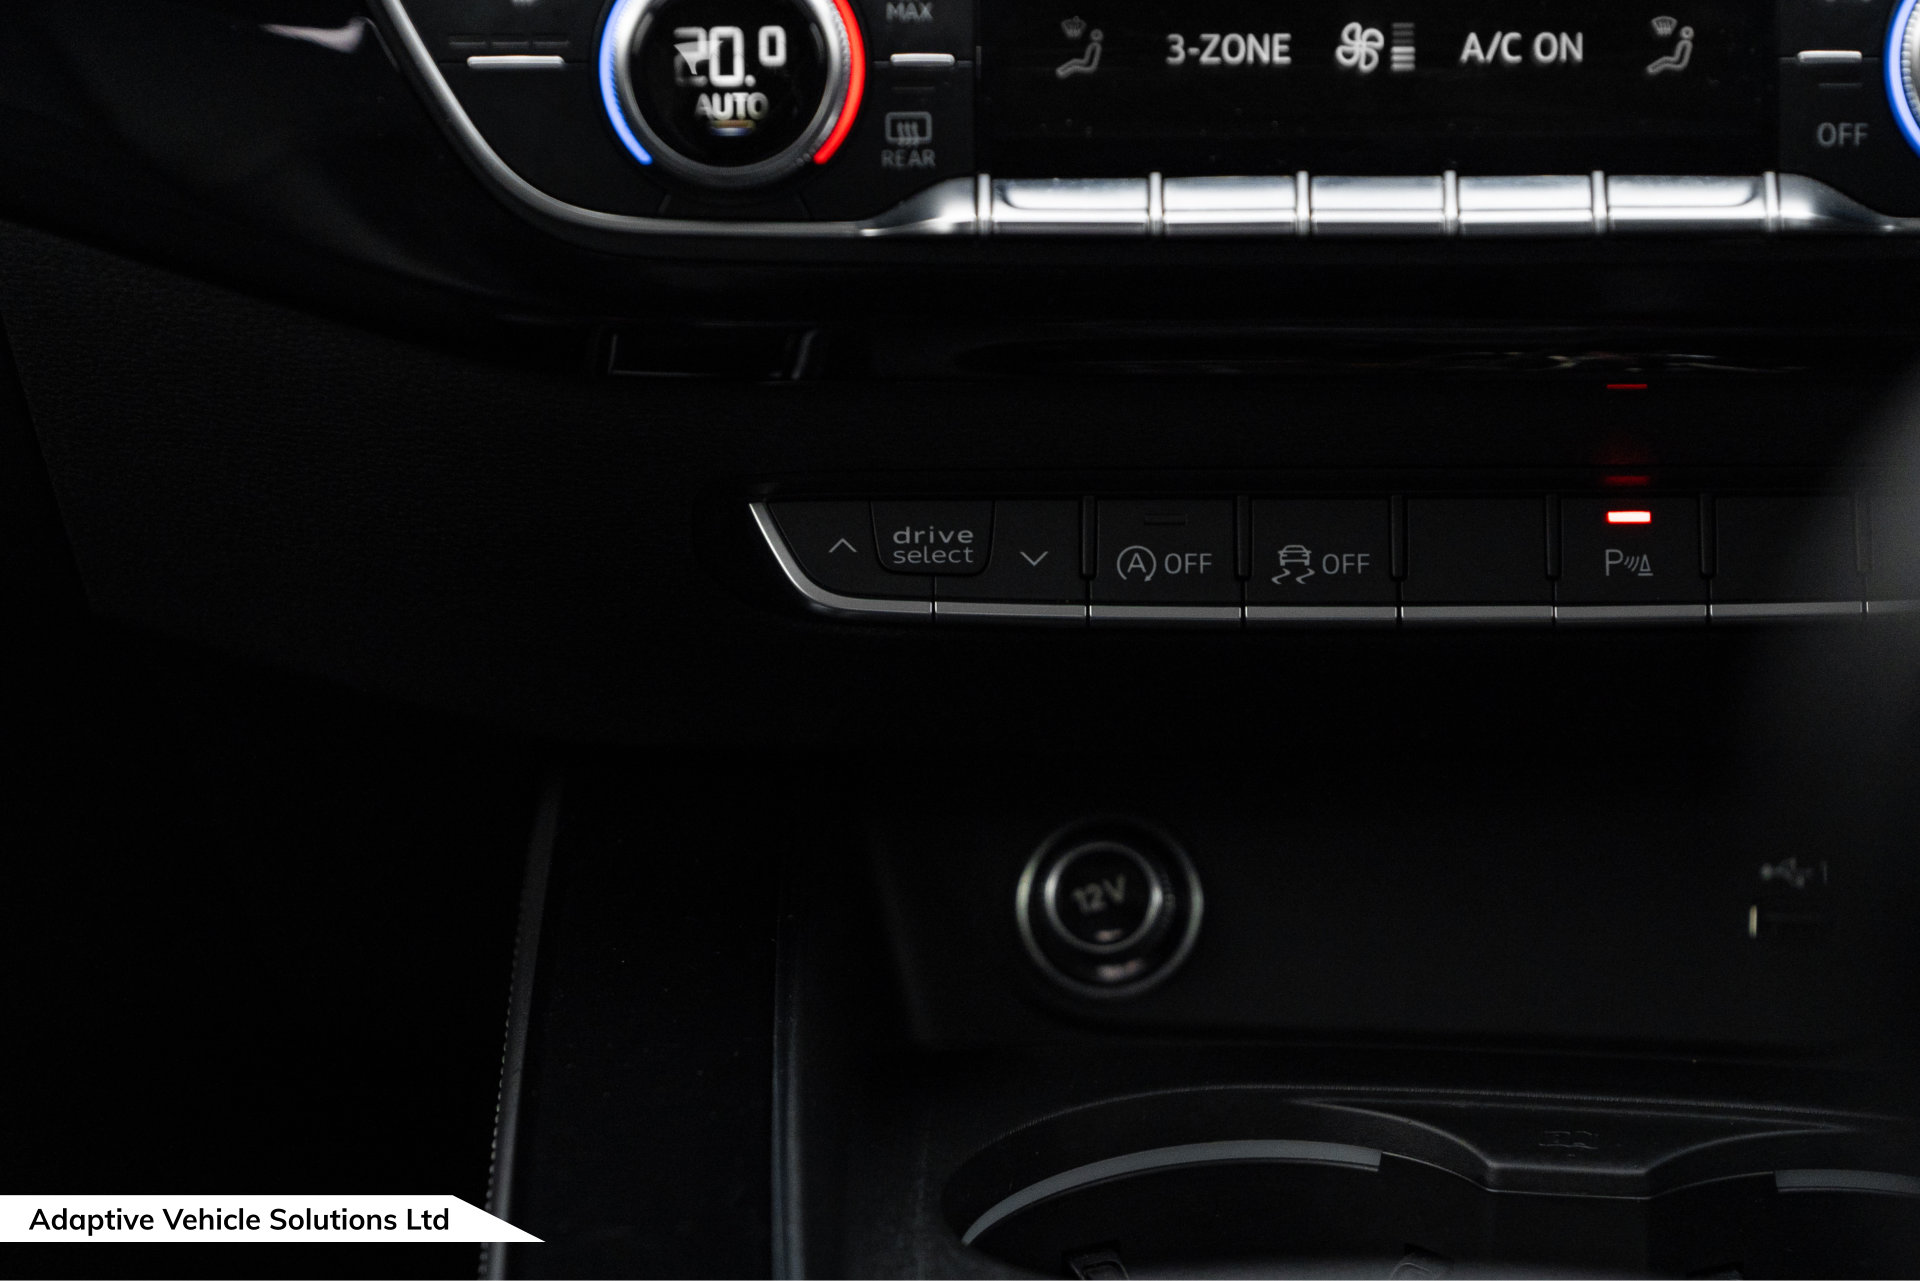 2019 Audi RS4 Avant Sport Edition Nardo Grey drive select buttons